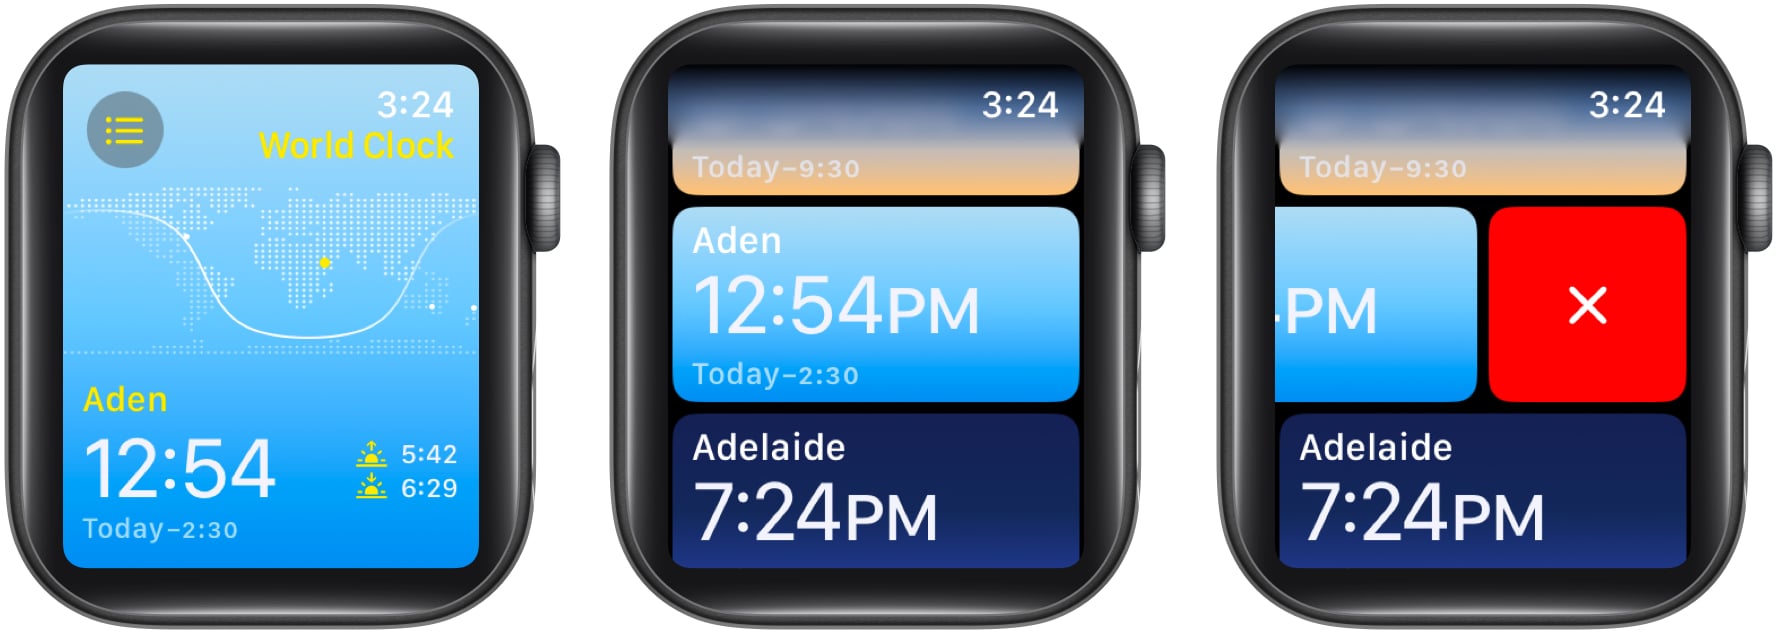 Delete World Clocks from World Clock app on Apple Watch